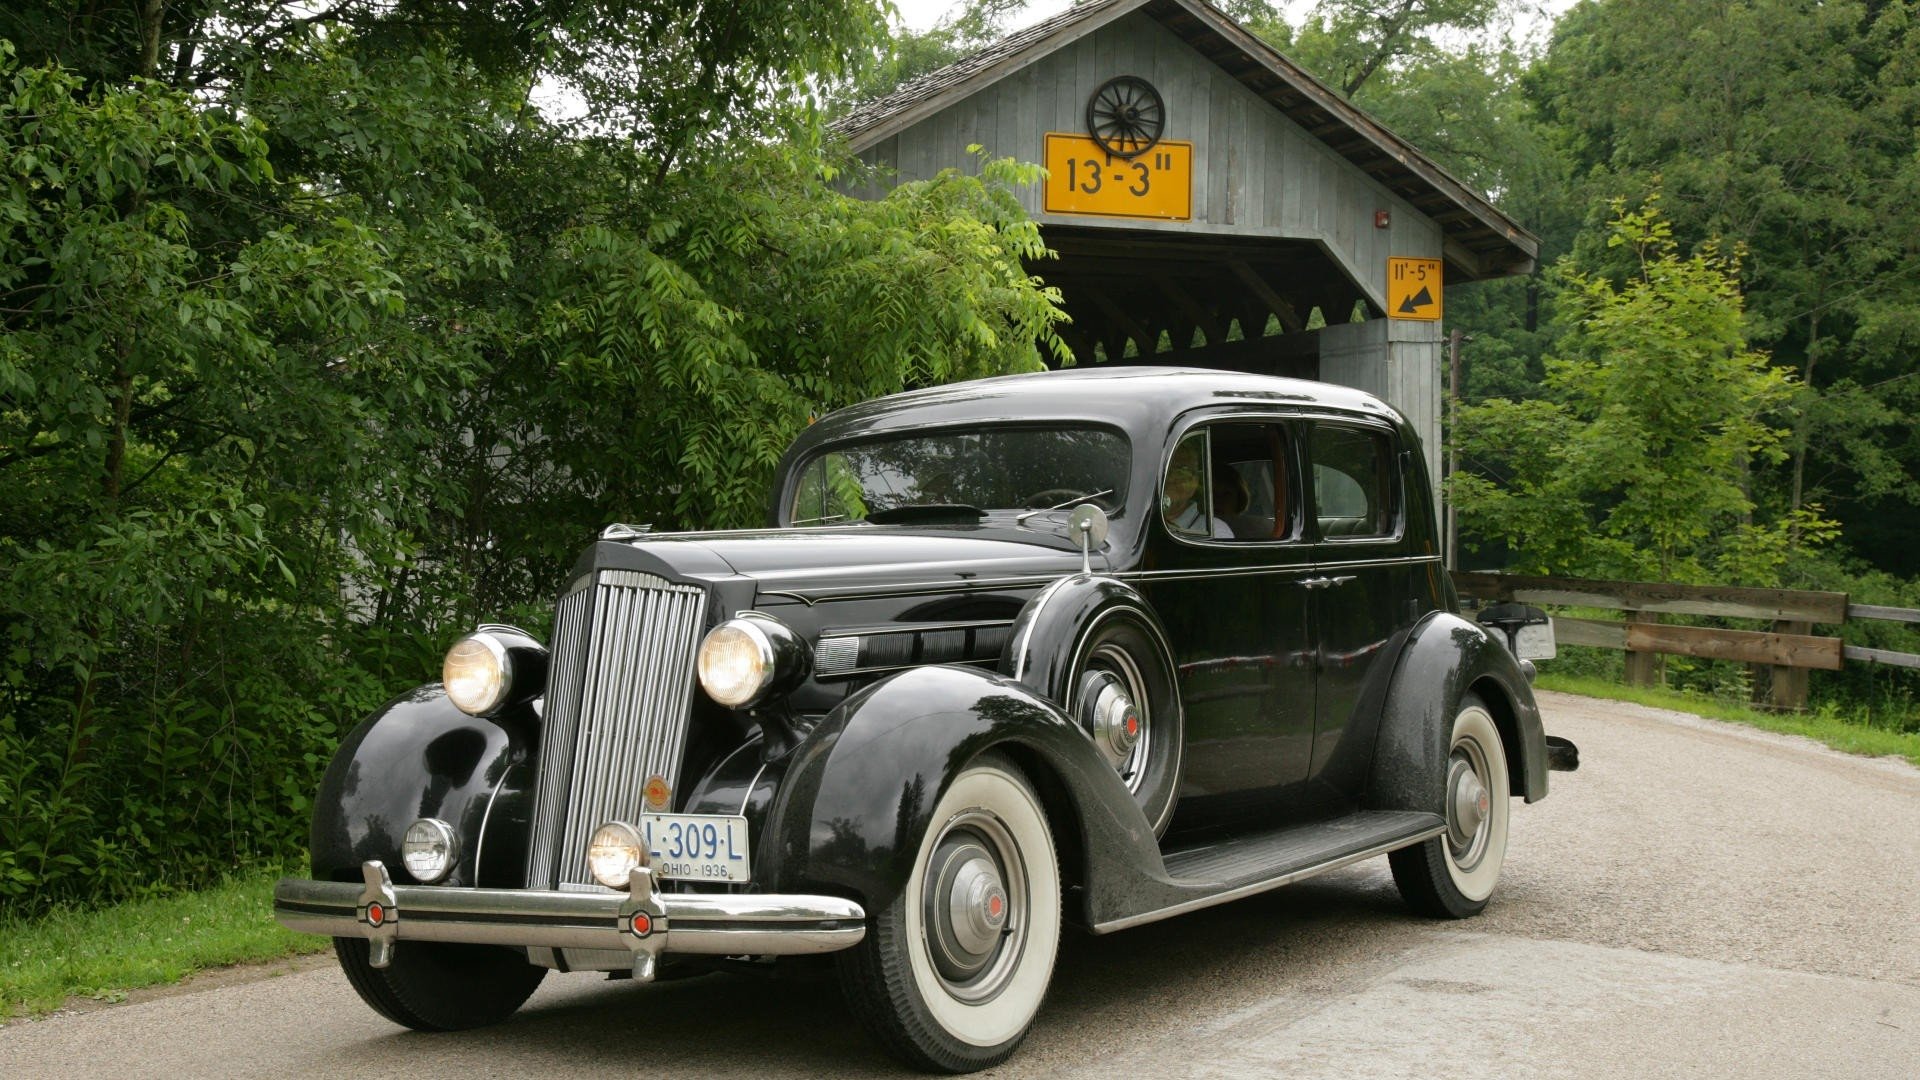 1936 Packard V-12 Sedan Victoria High Quality Background on Wallpapers Vista